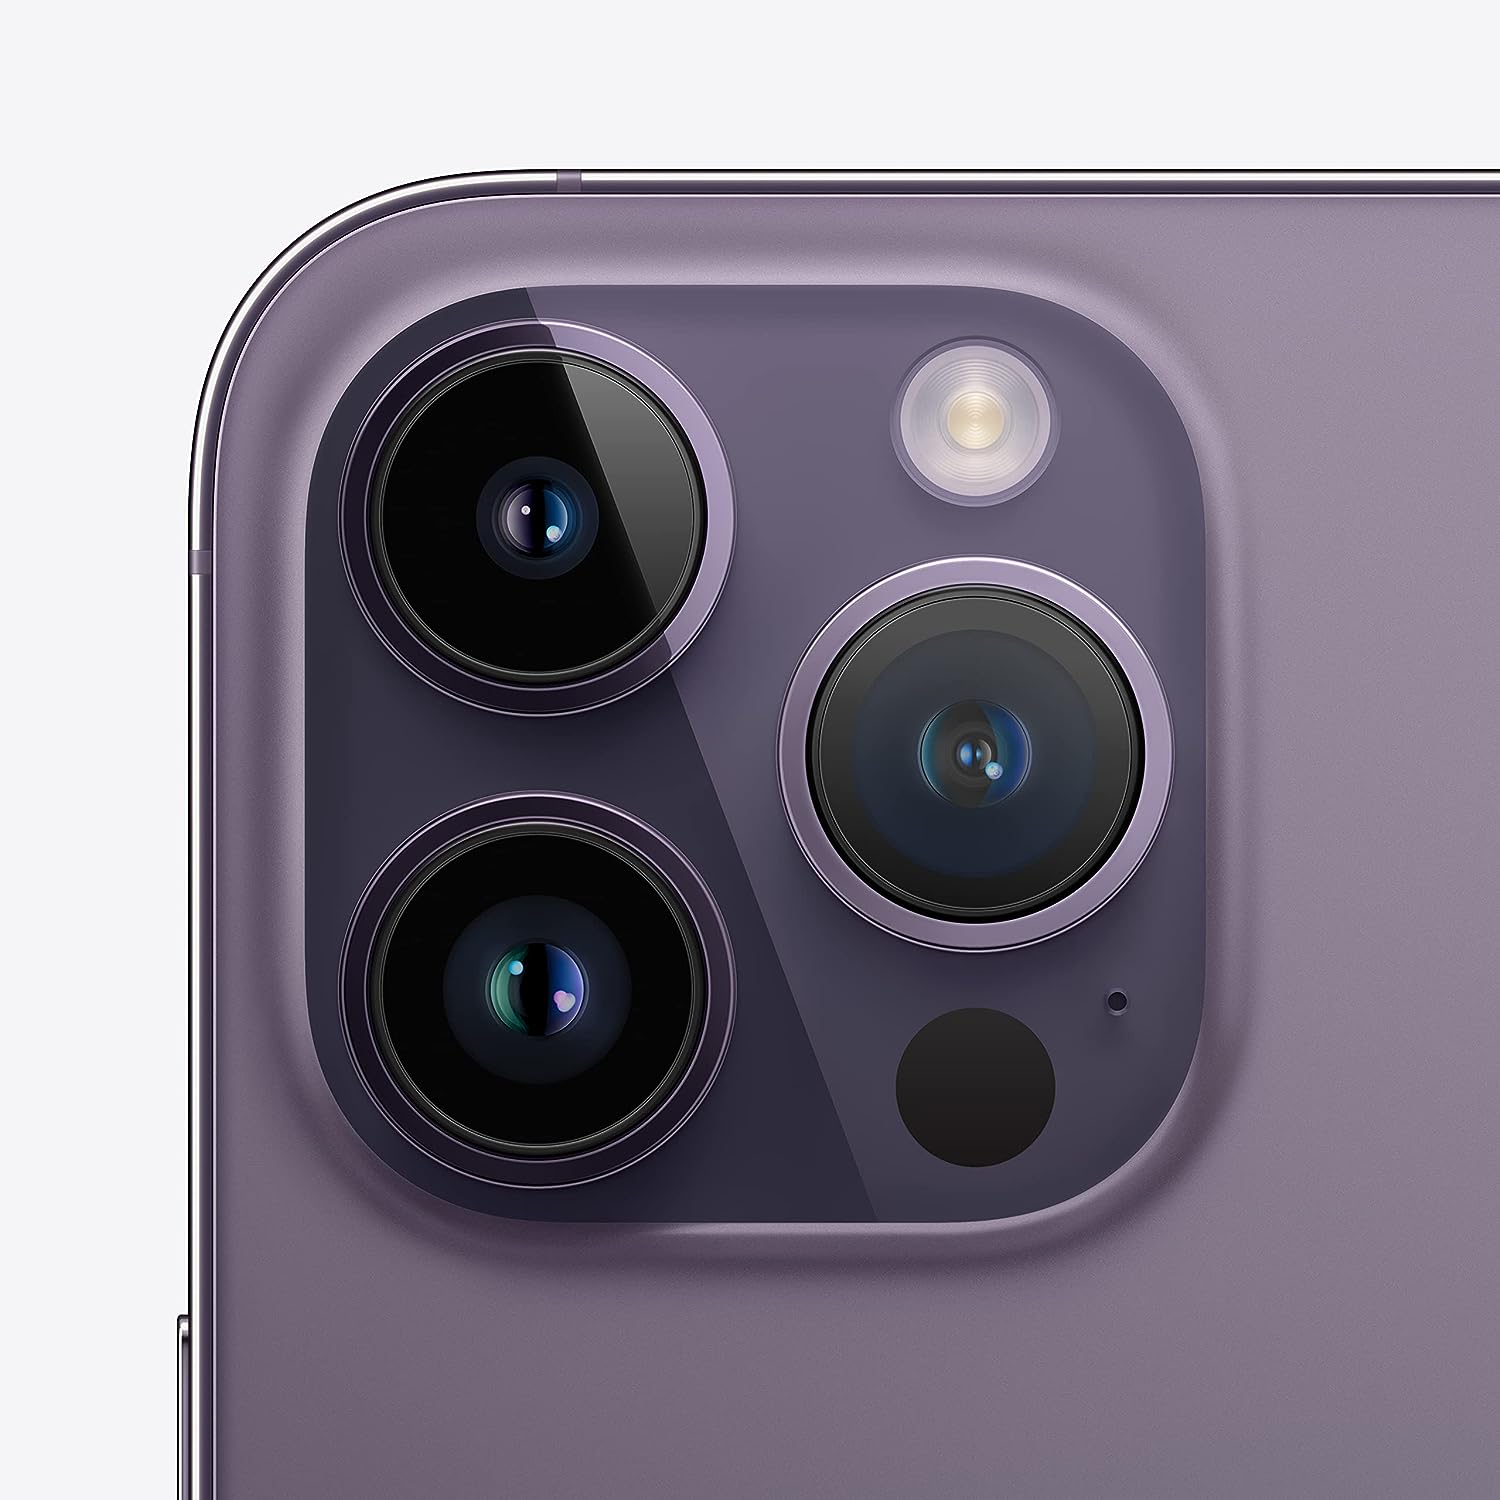 Apple iPhone 14 Pro Max (256 GB) - Deep Purple (Renewed)